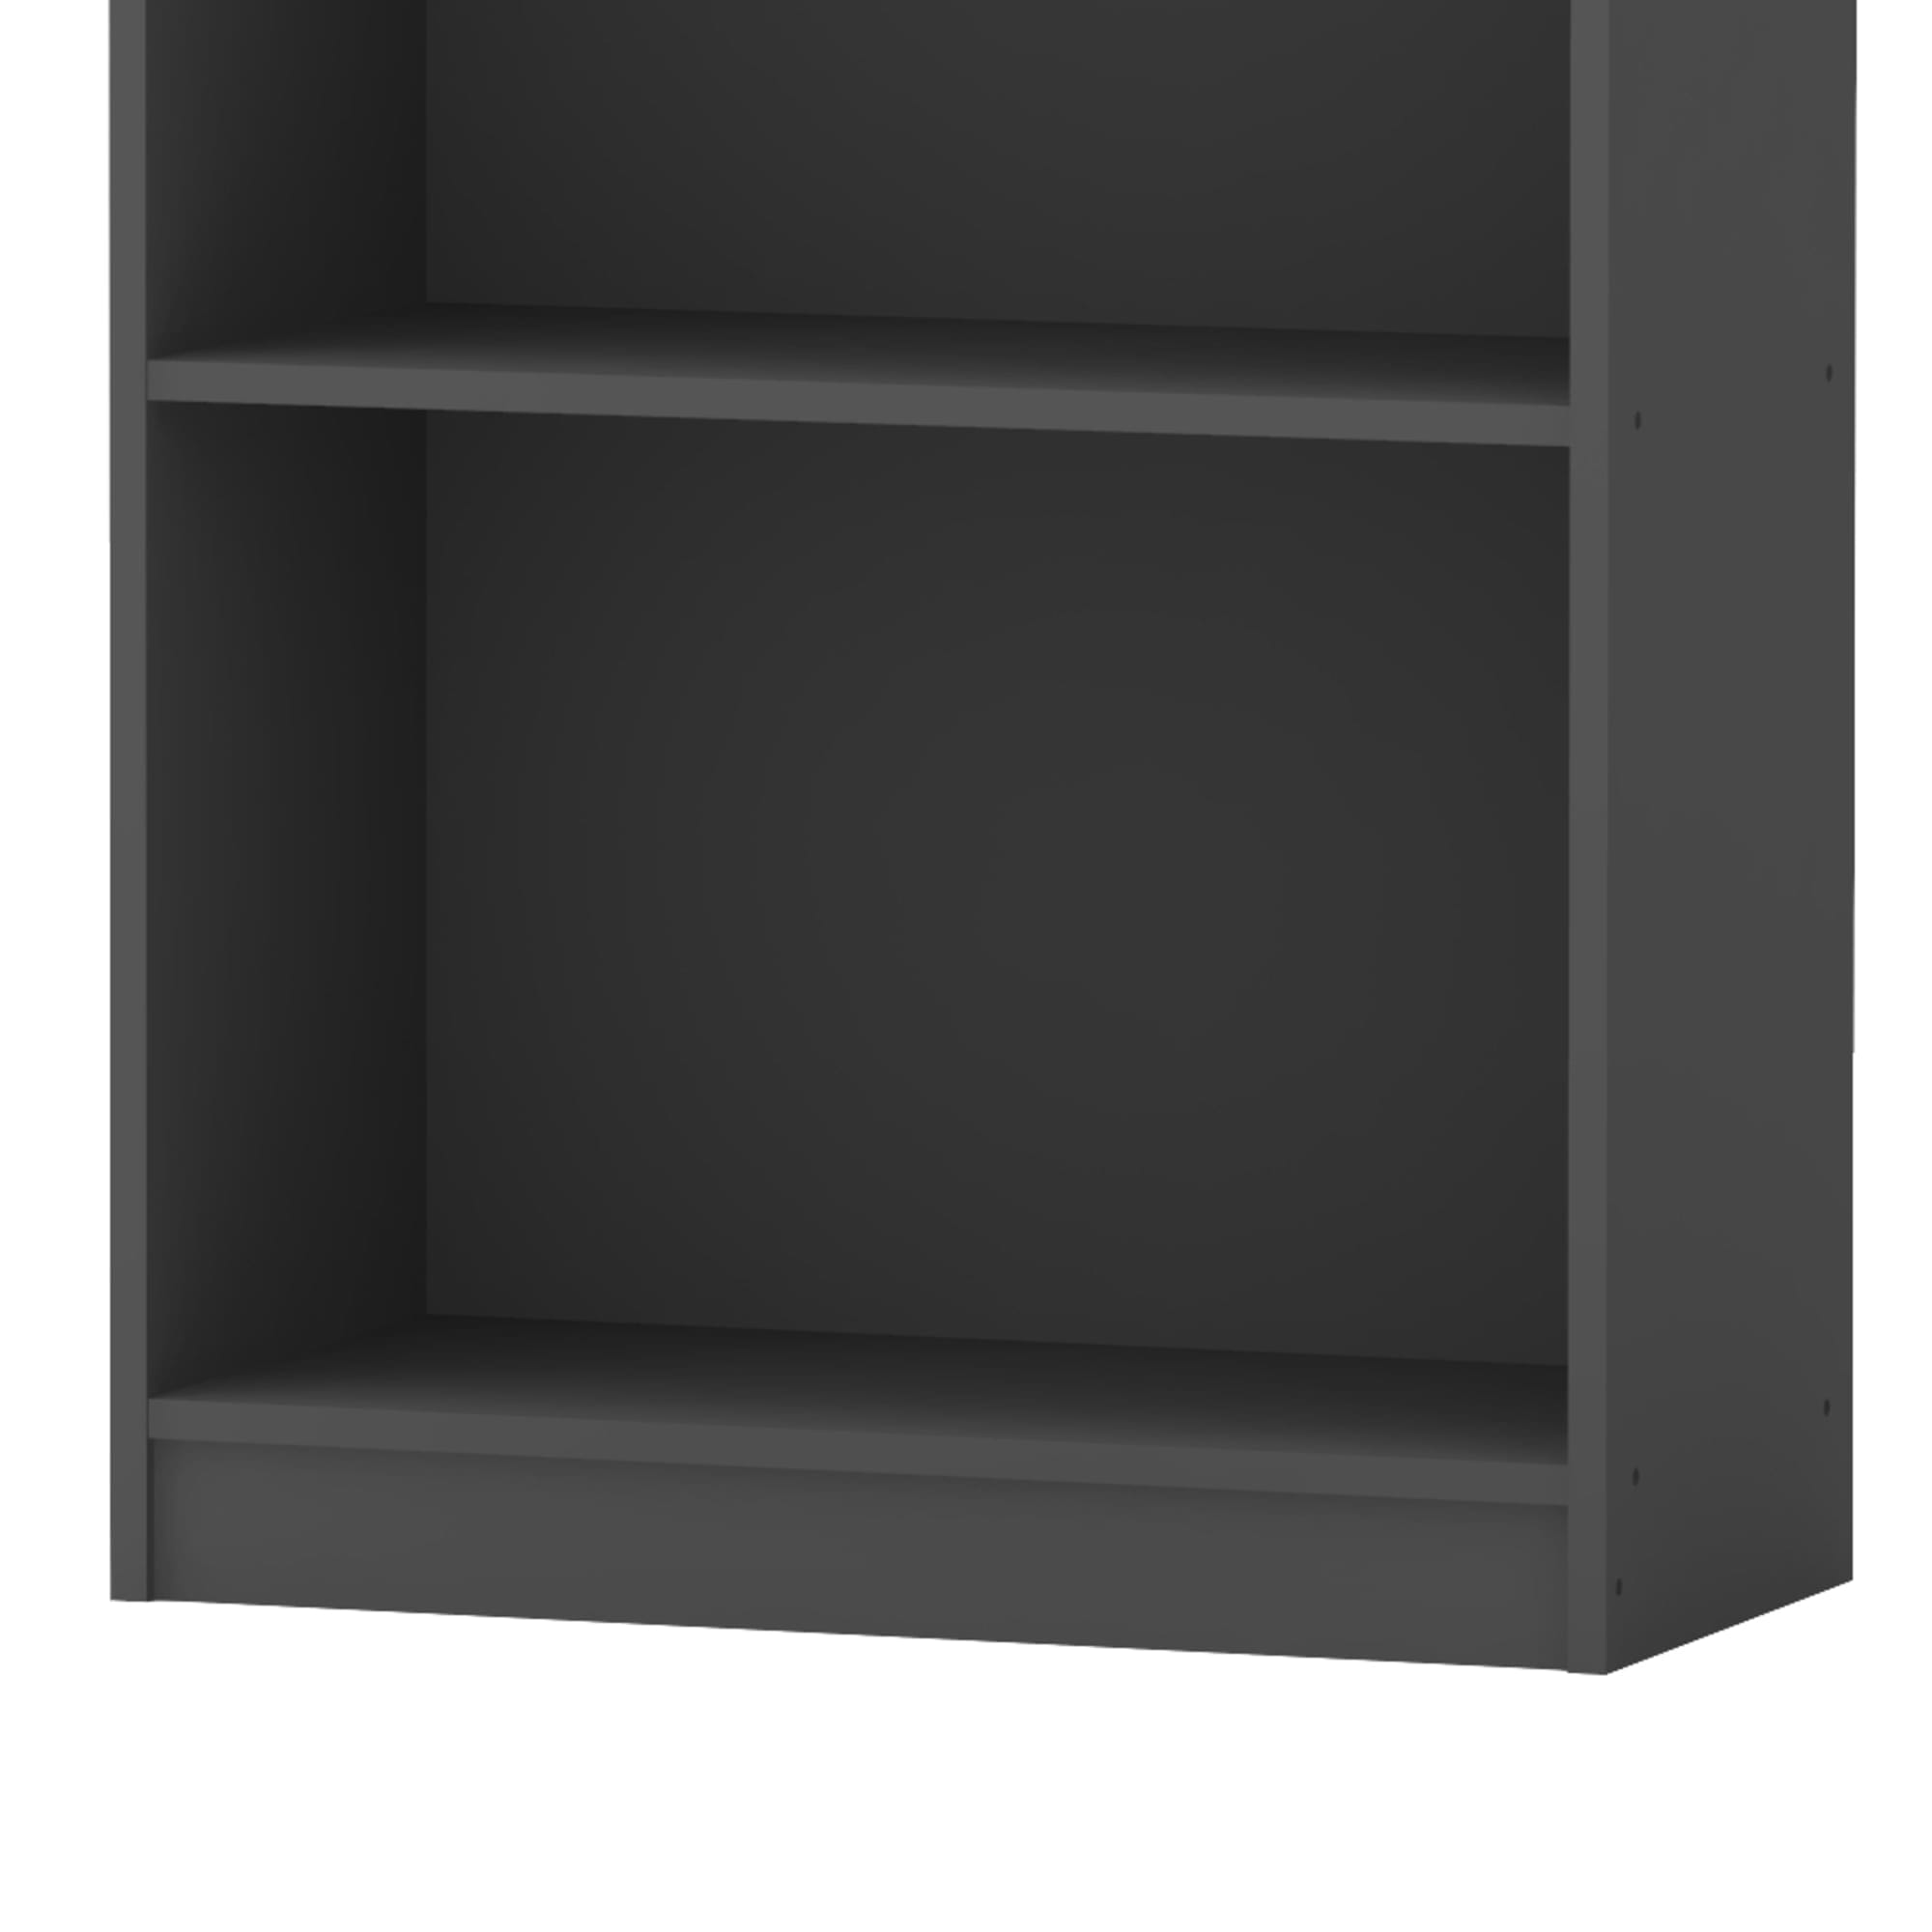 Home Basics 4 Shelf Bookcase, Grey $60.00 EACH, CASE PACK OF 1